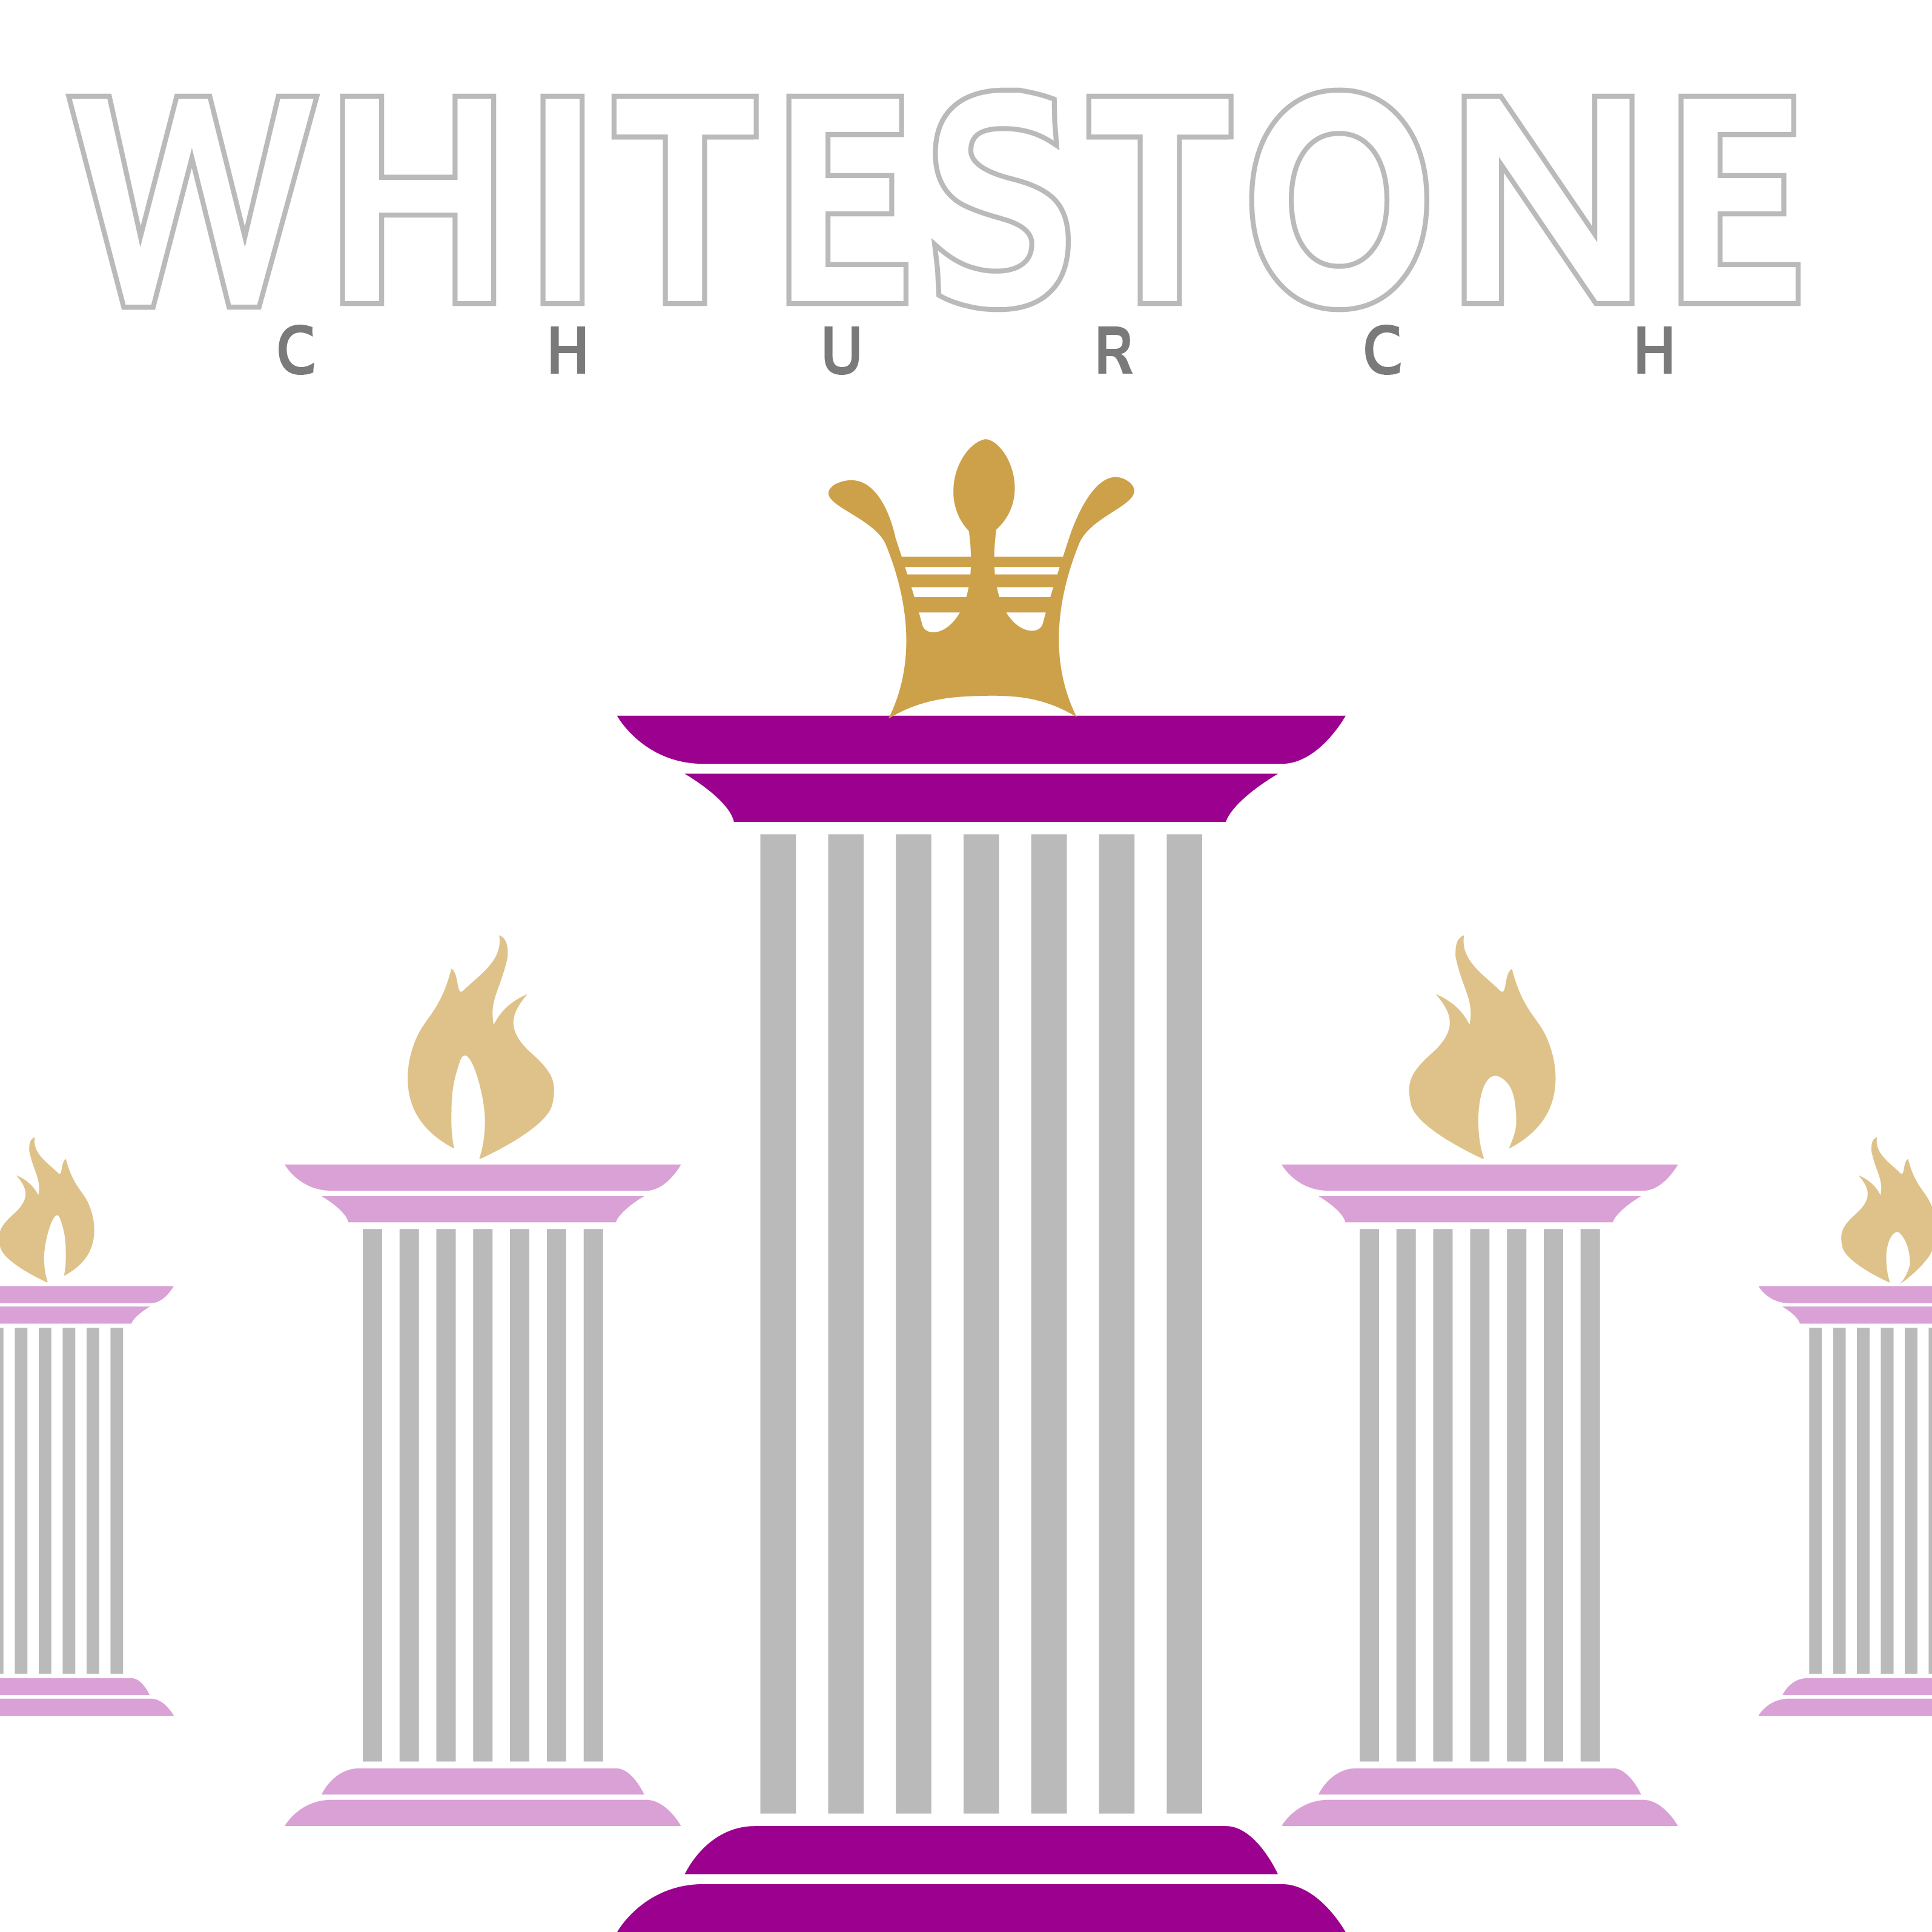 White Stone station